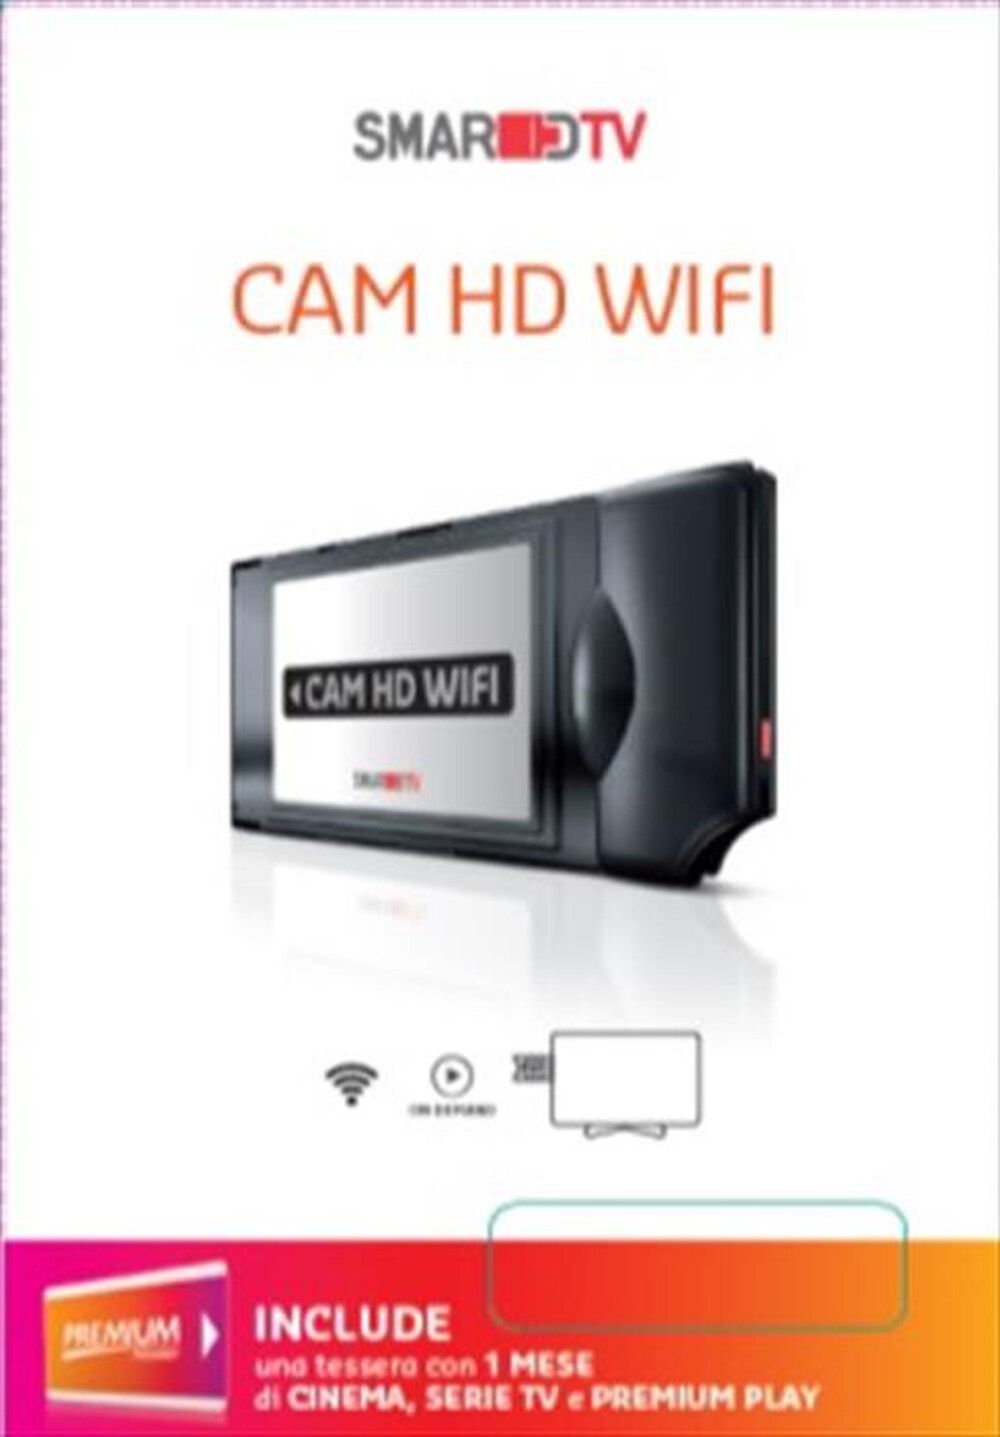 "MEDIASET - CAM HD WIFI - "